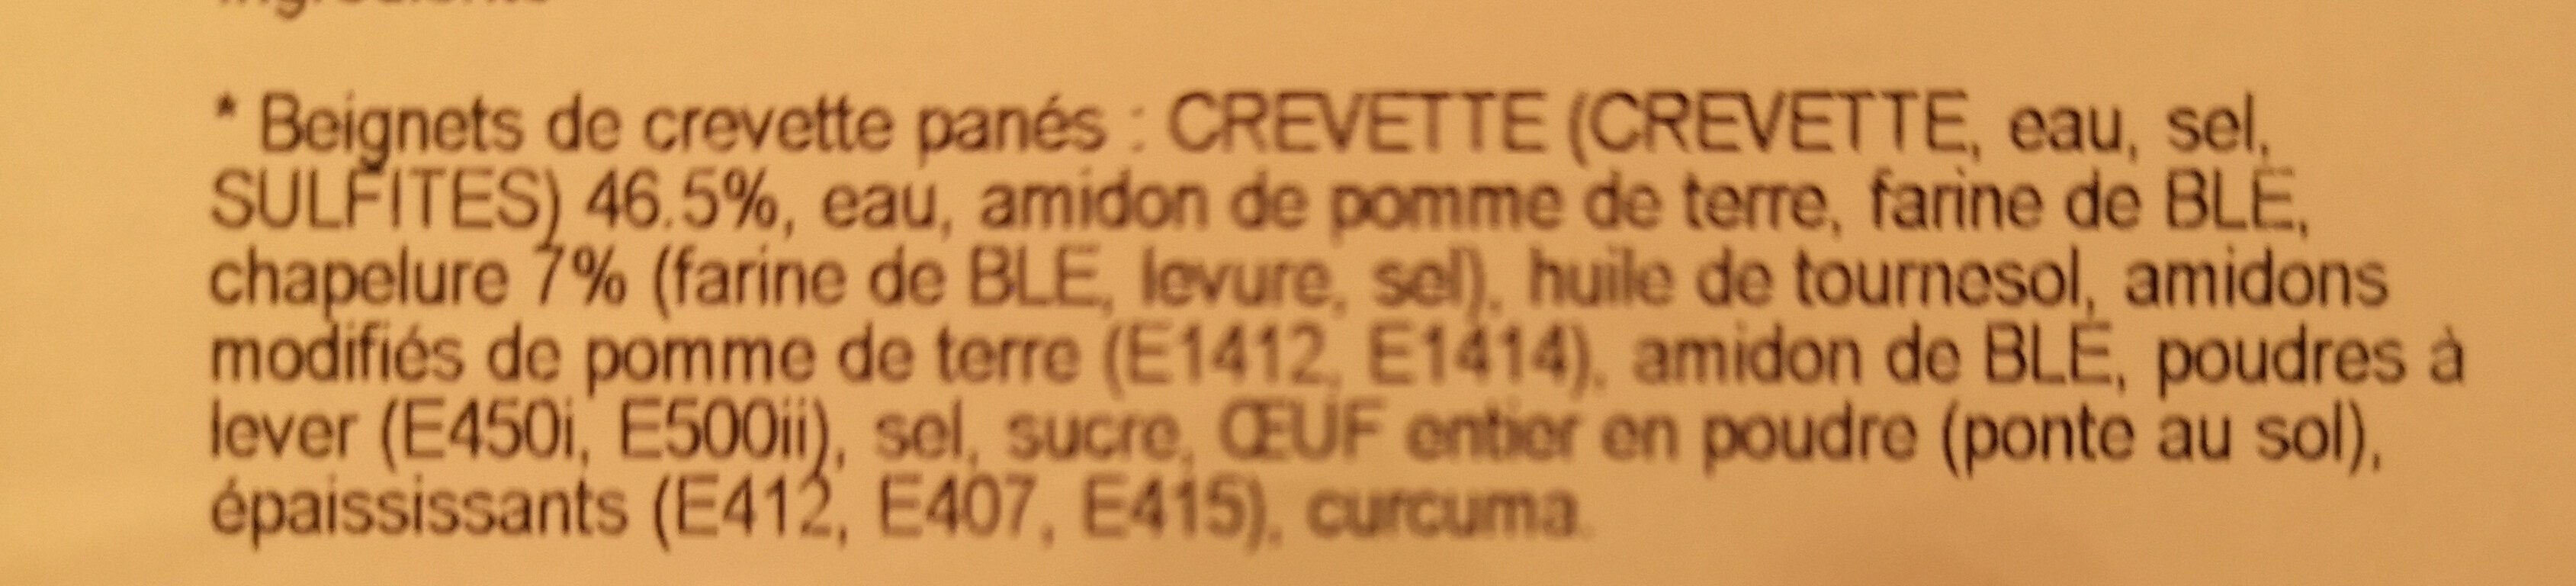 Beignets de crevette - المكونات - fr